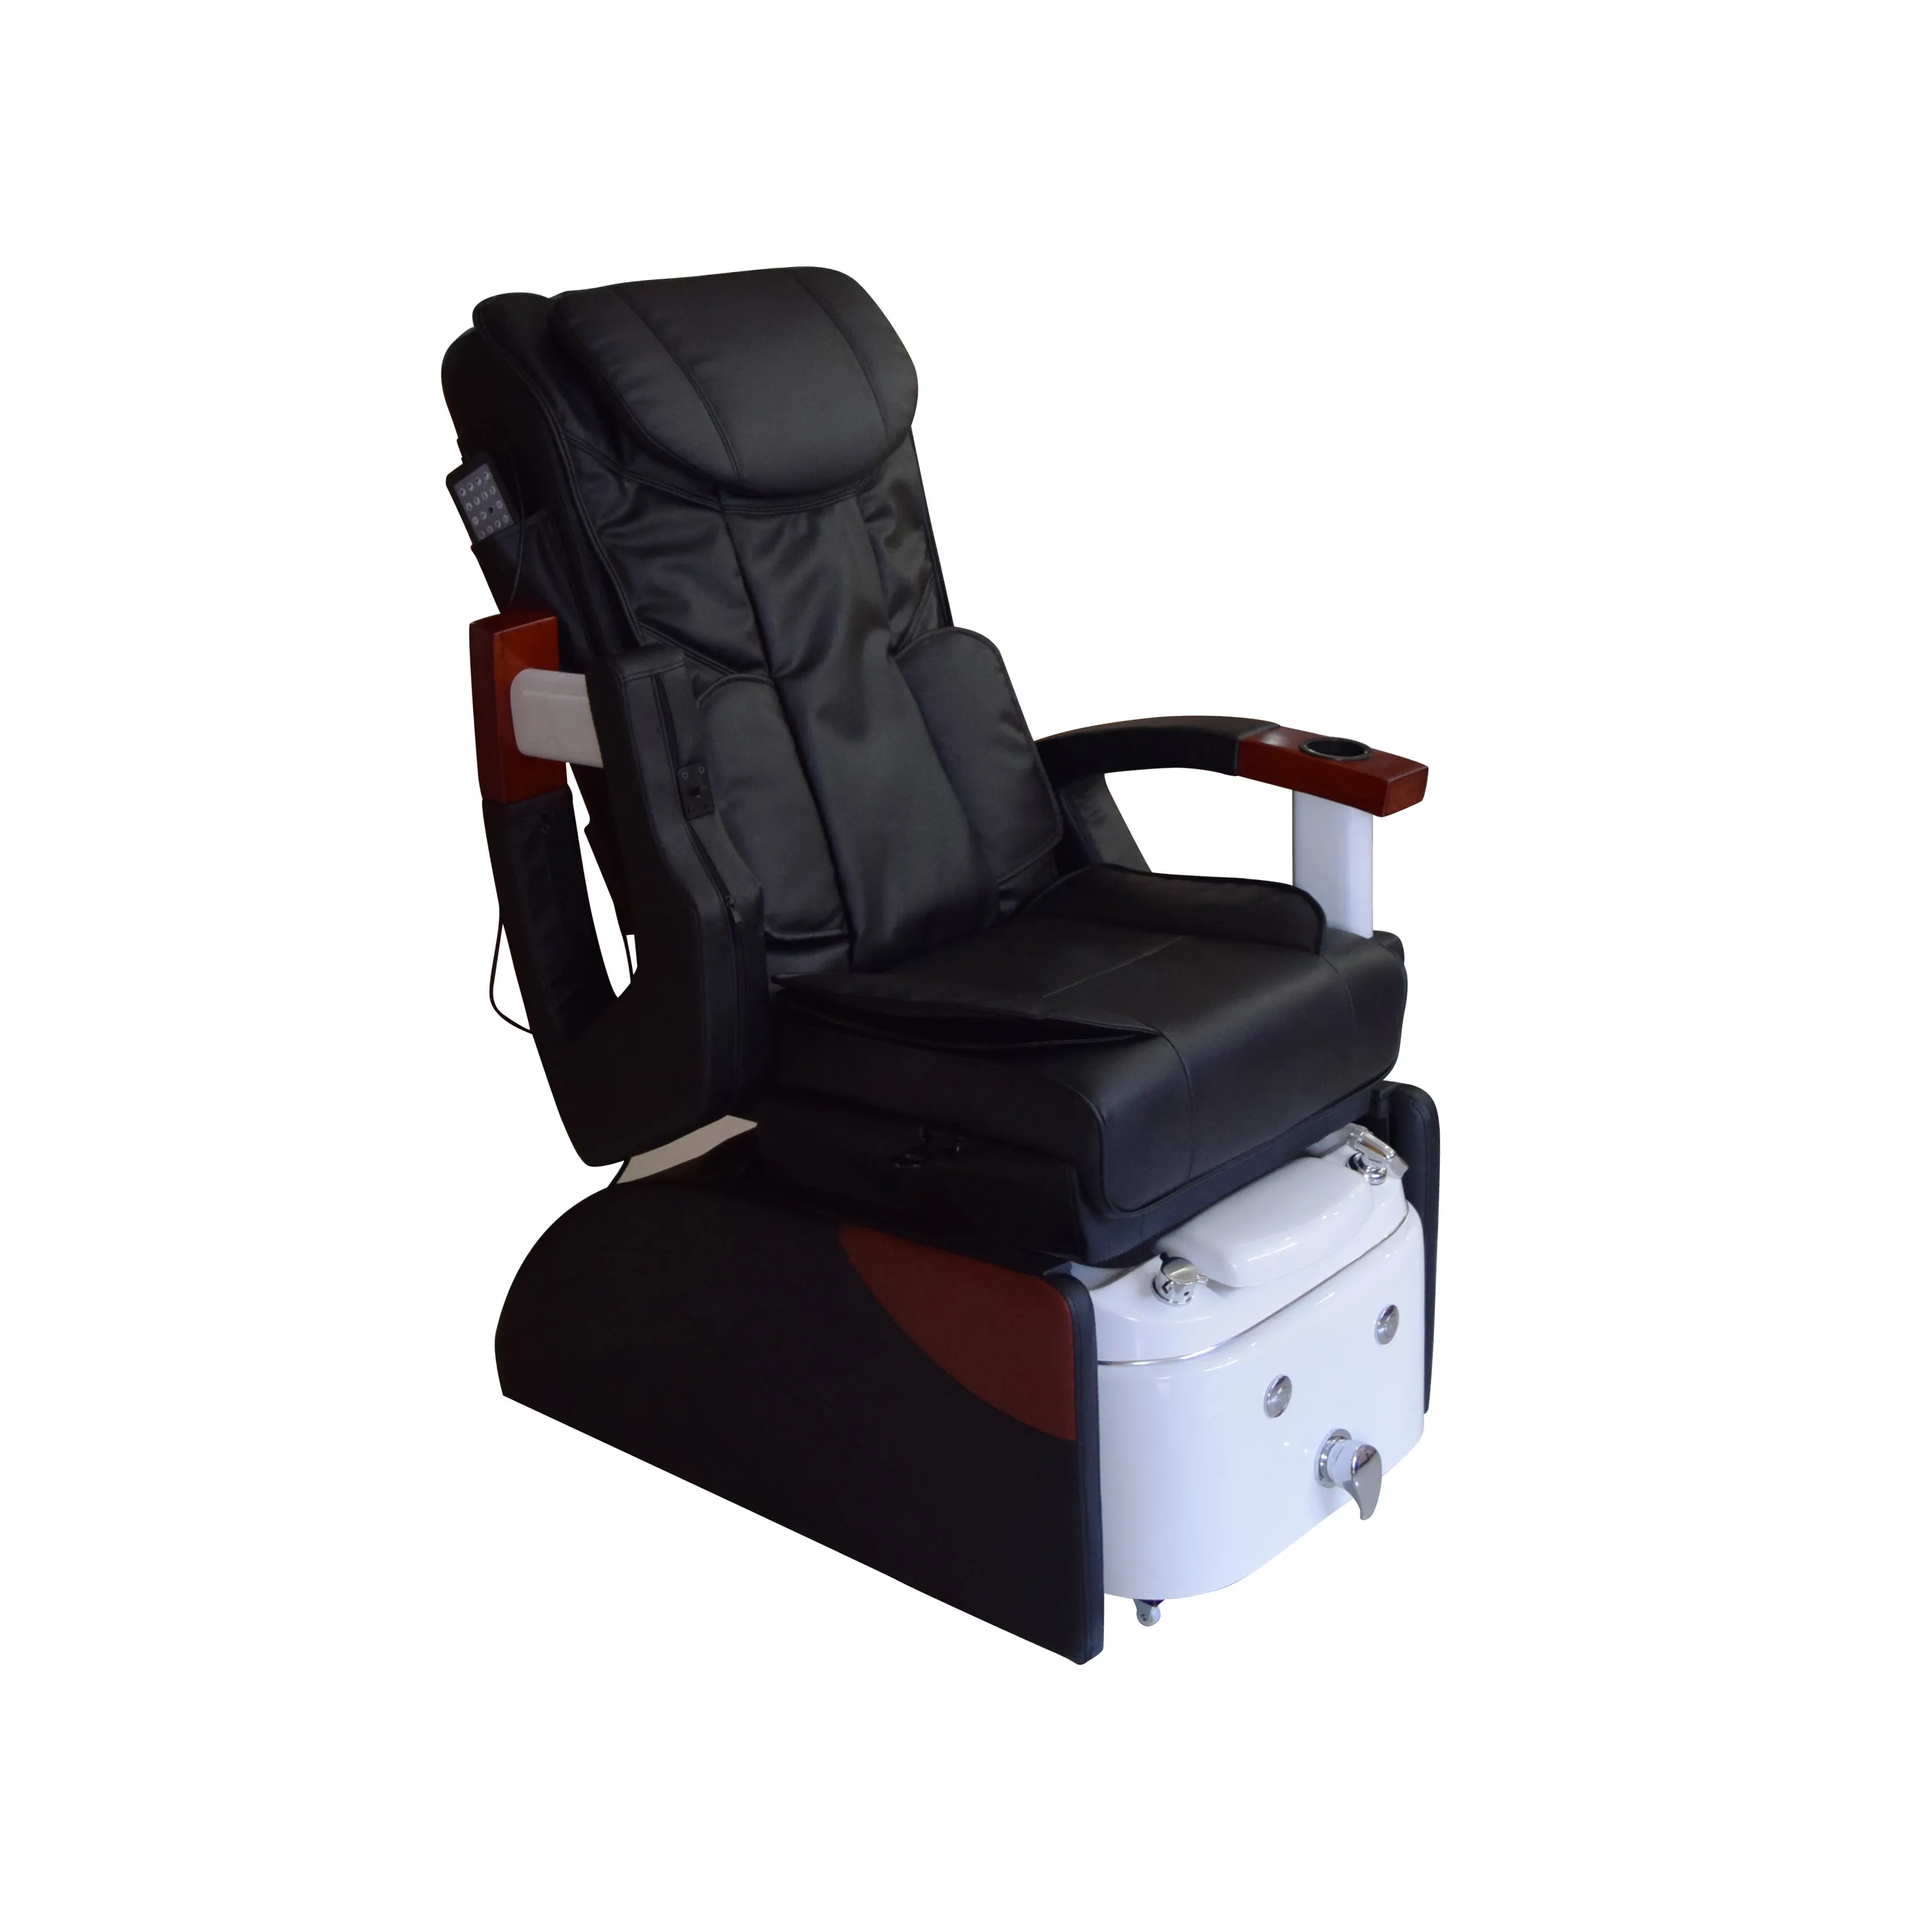 Automatically Retractable Spa Tub hides underneath pedicure spa massage chair